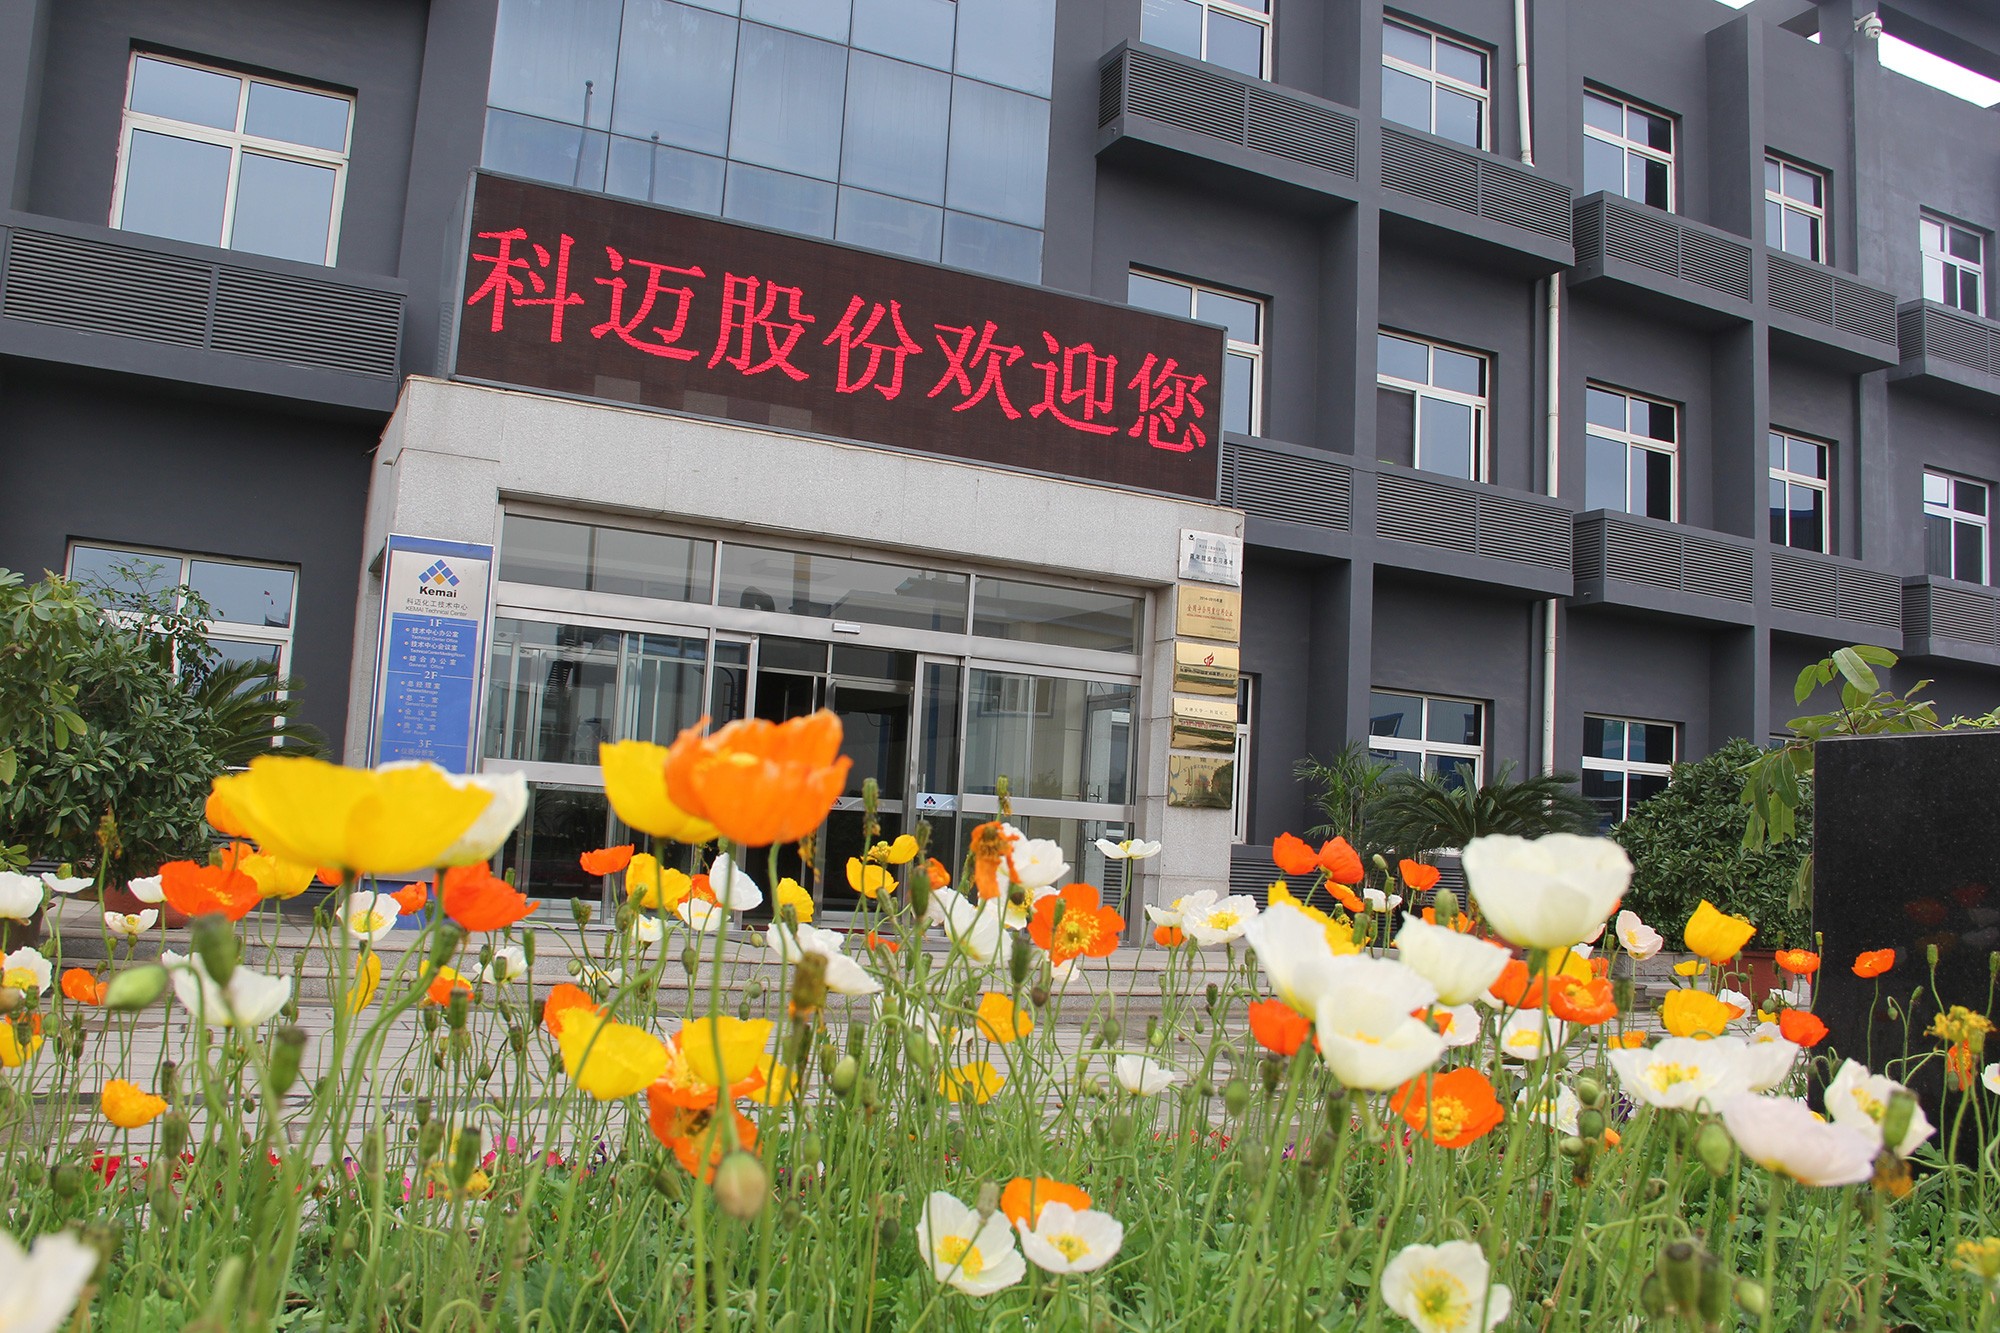 js155金沙所有网址天津工厂获评2019年度天津市“绿色工厂”